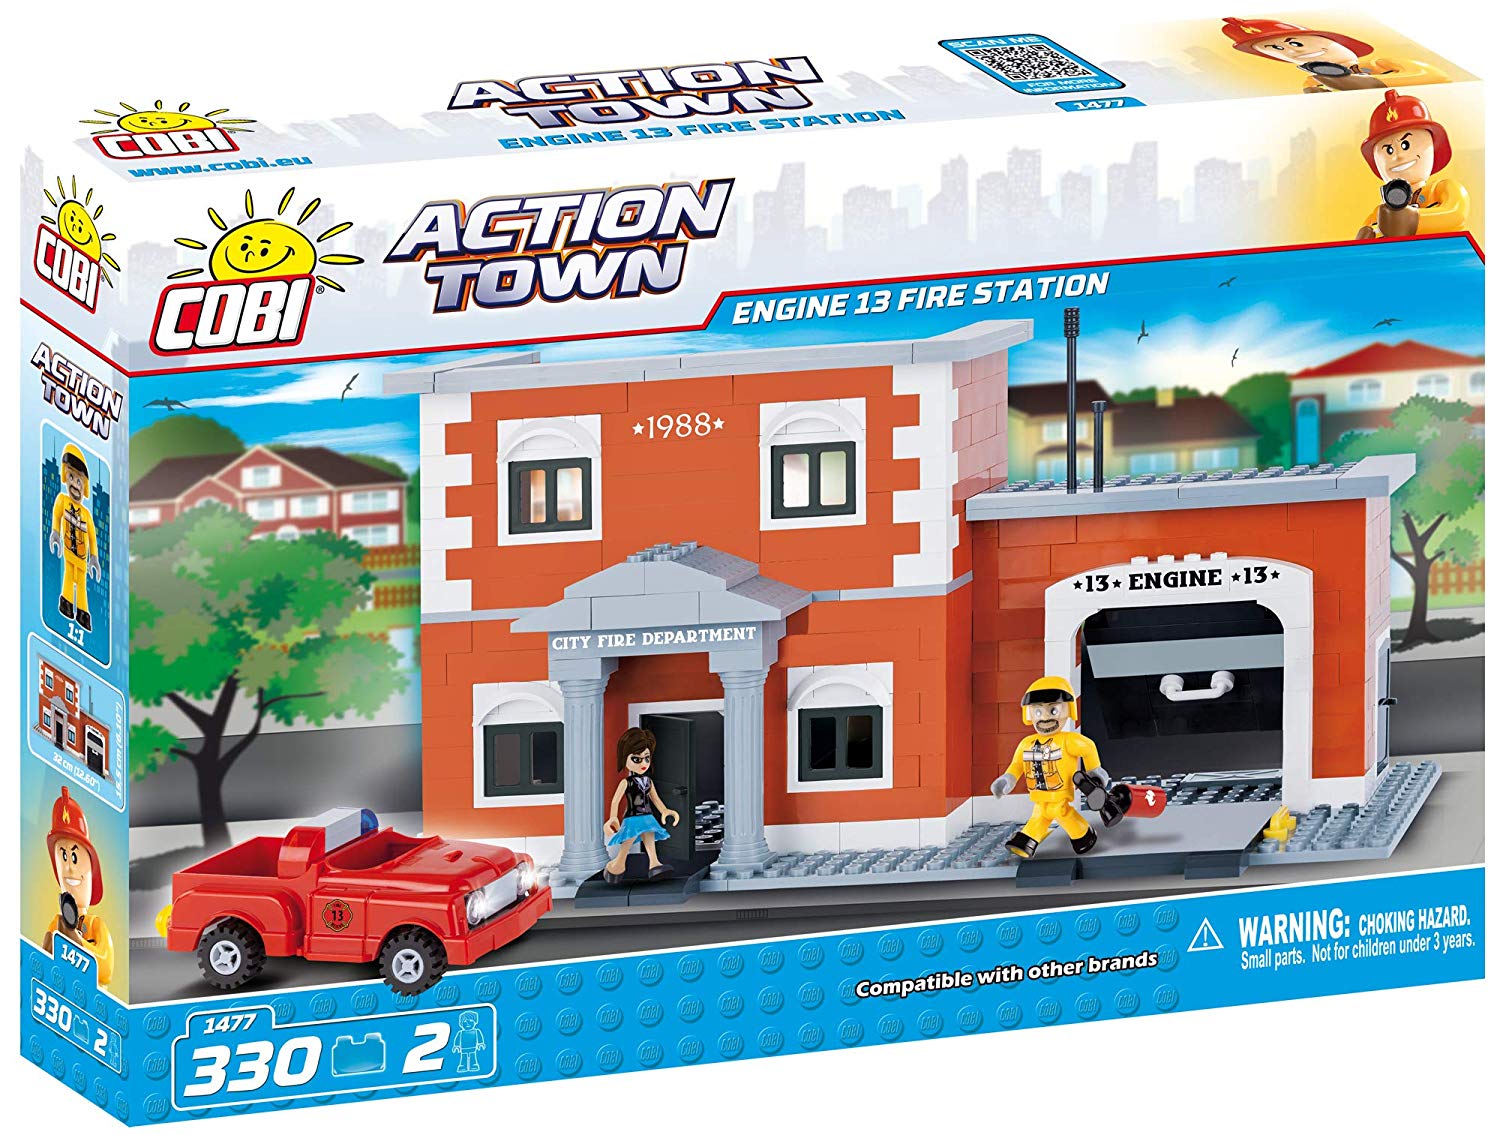 Cobi Cob01477 Action Town - Engine13 Fire Station (330 Pcs) Assorted